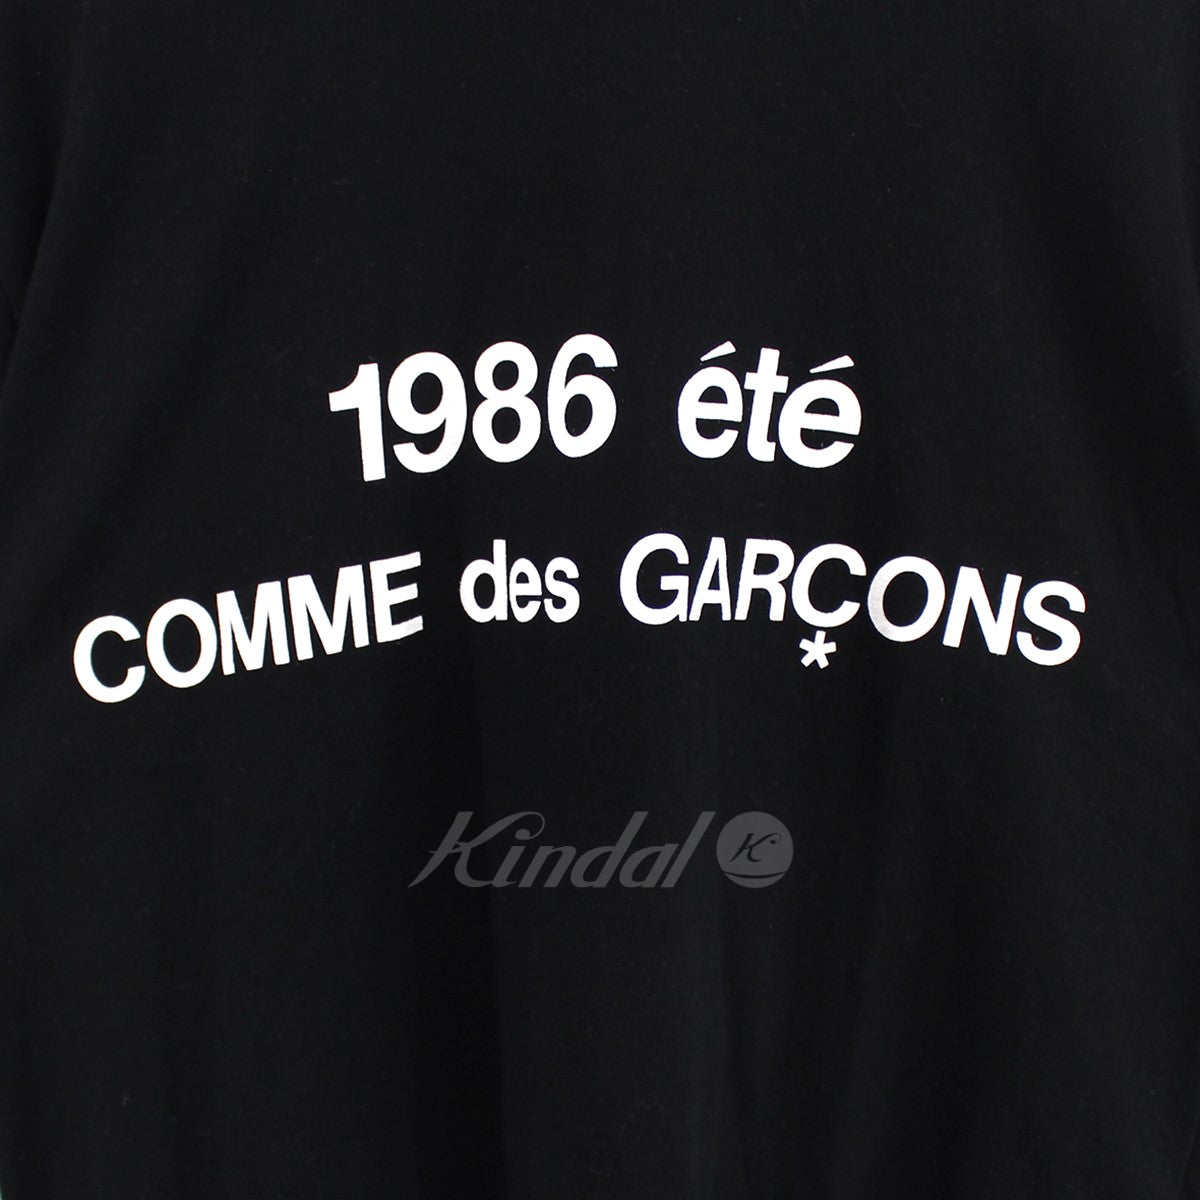 COMME des GARCONS CDG(コムデギャルソン シーディージー) 22SS 1986 ete S／S TEE ロゴ Tシャツ  SZ-T028 ブラック サイズ 14｜【公式】カインドオルオンライン ブランド古着・中古通販【kindal】